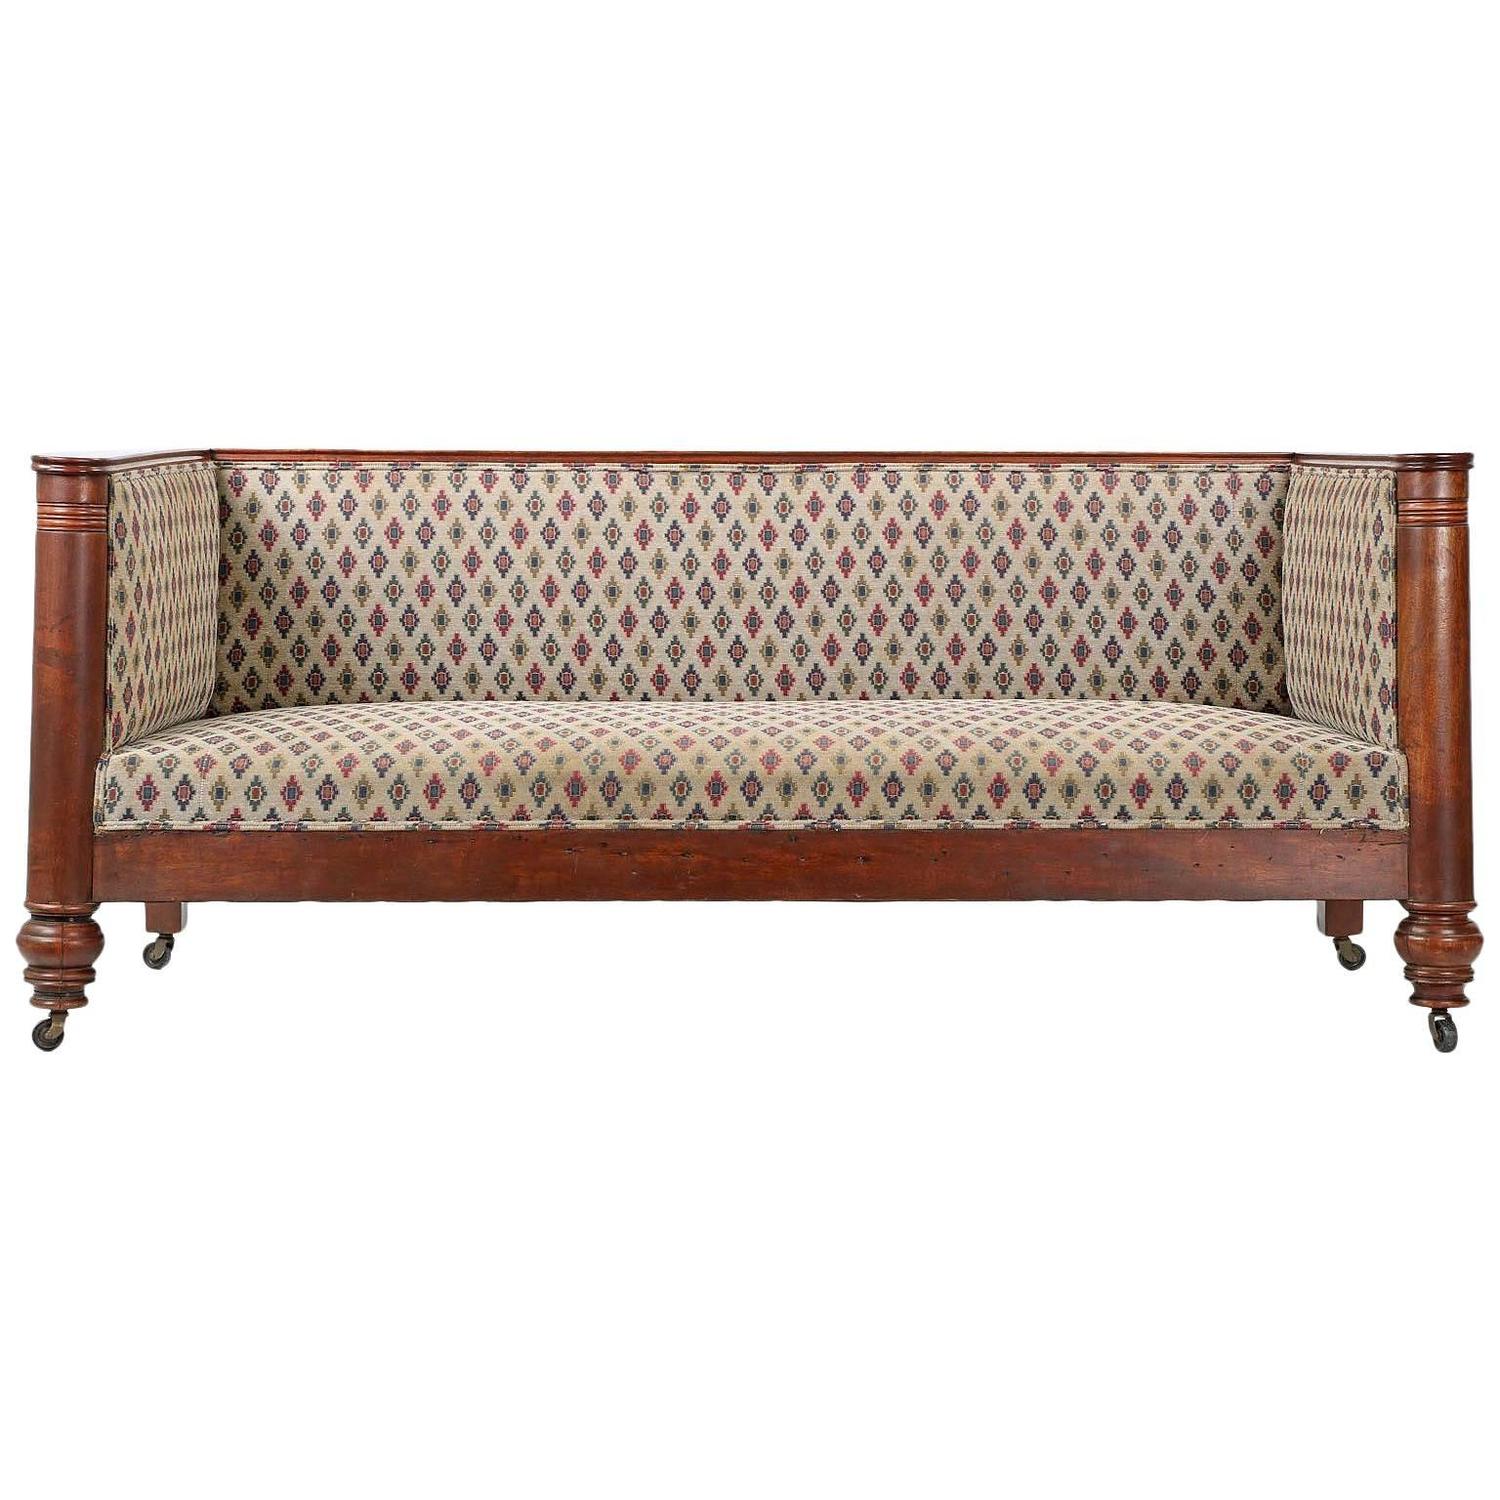 19th century empire box form antique sofa settee with barrel column arms at DLLXDJK